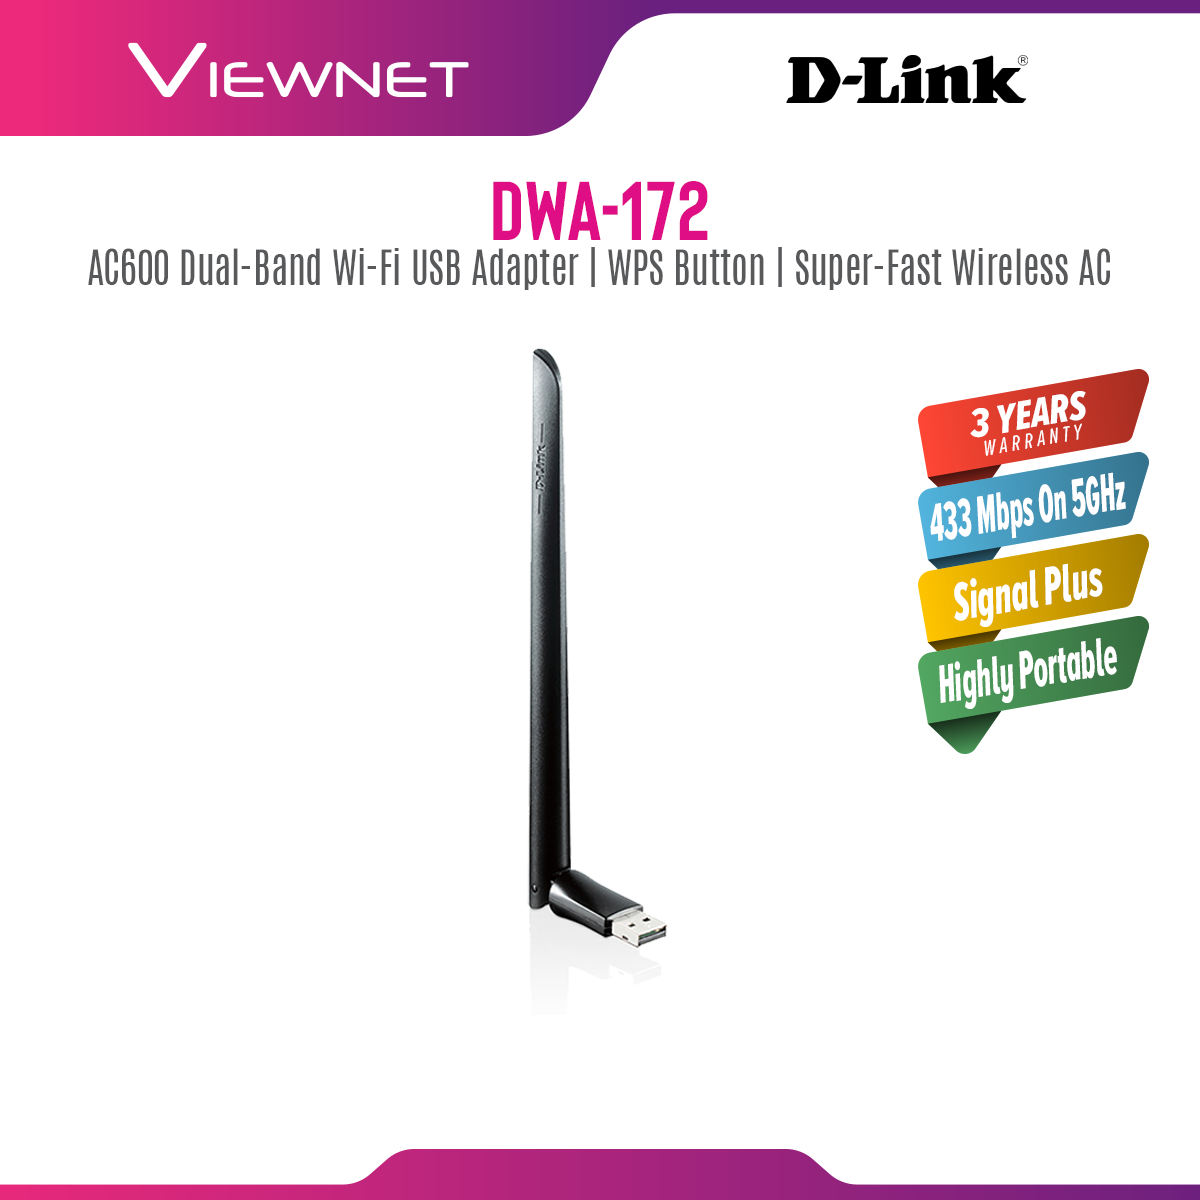 D-Link Wireless USB Adapter DWA-172 Wireless AC 600Mbps Dual-Band High, USB 2.0 Connector, High power 3dBi external antenna